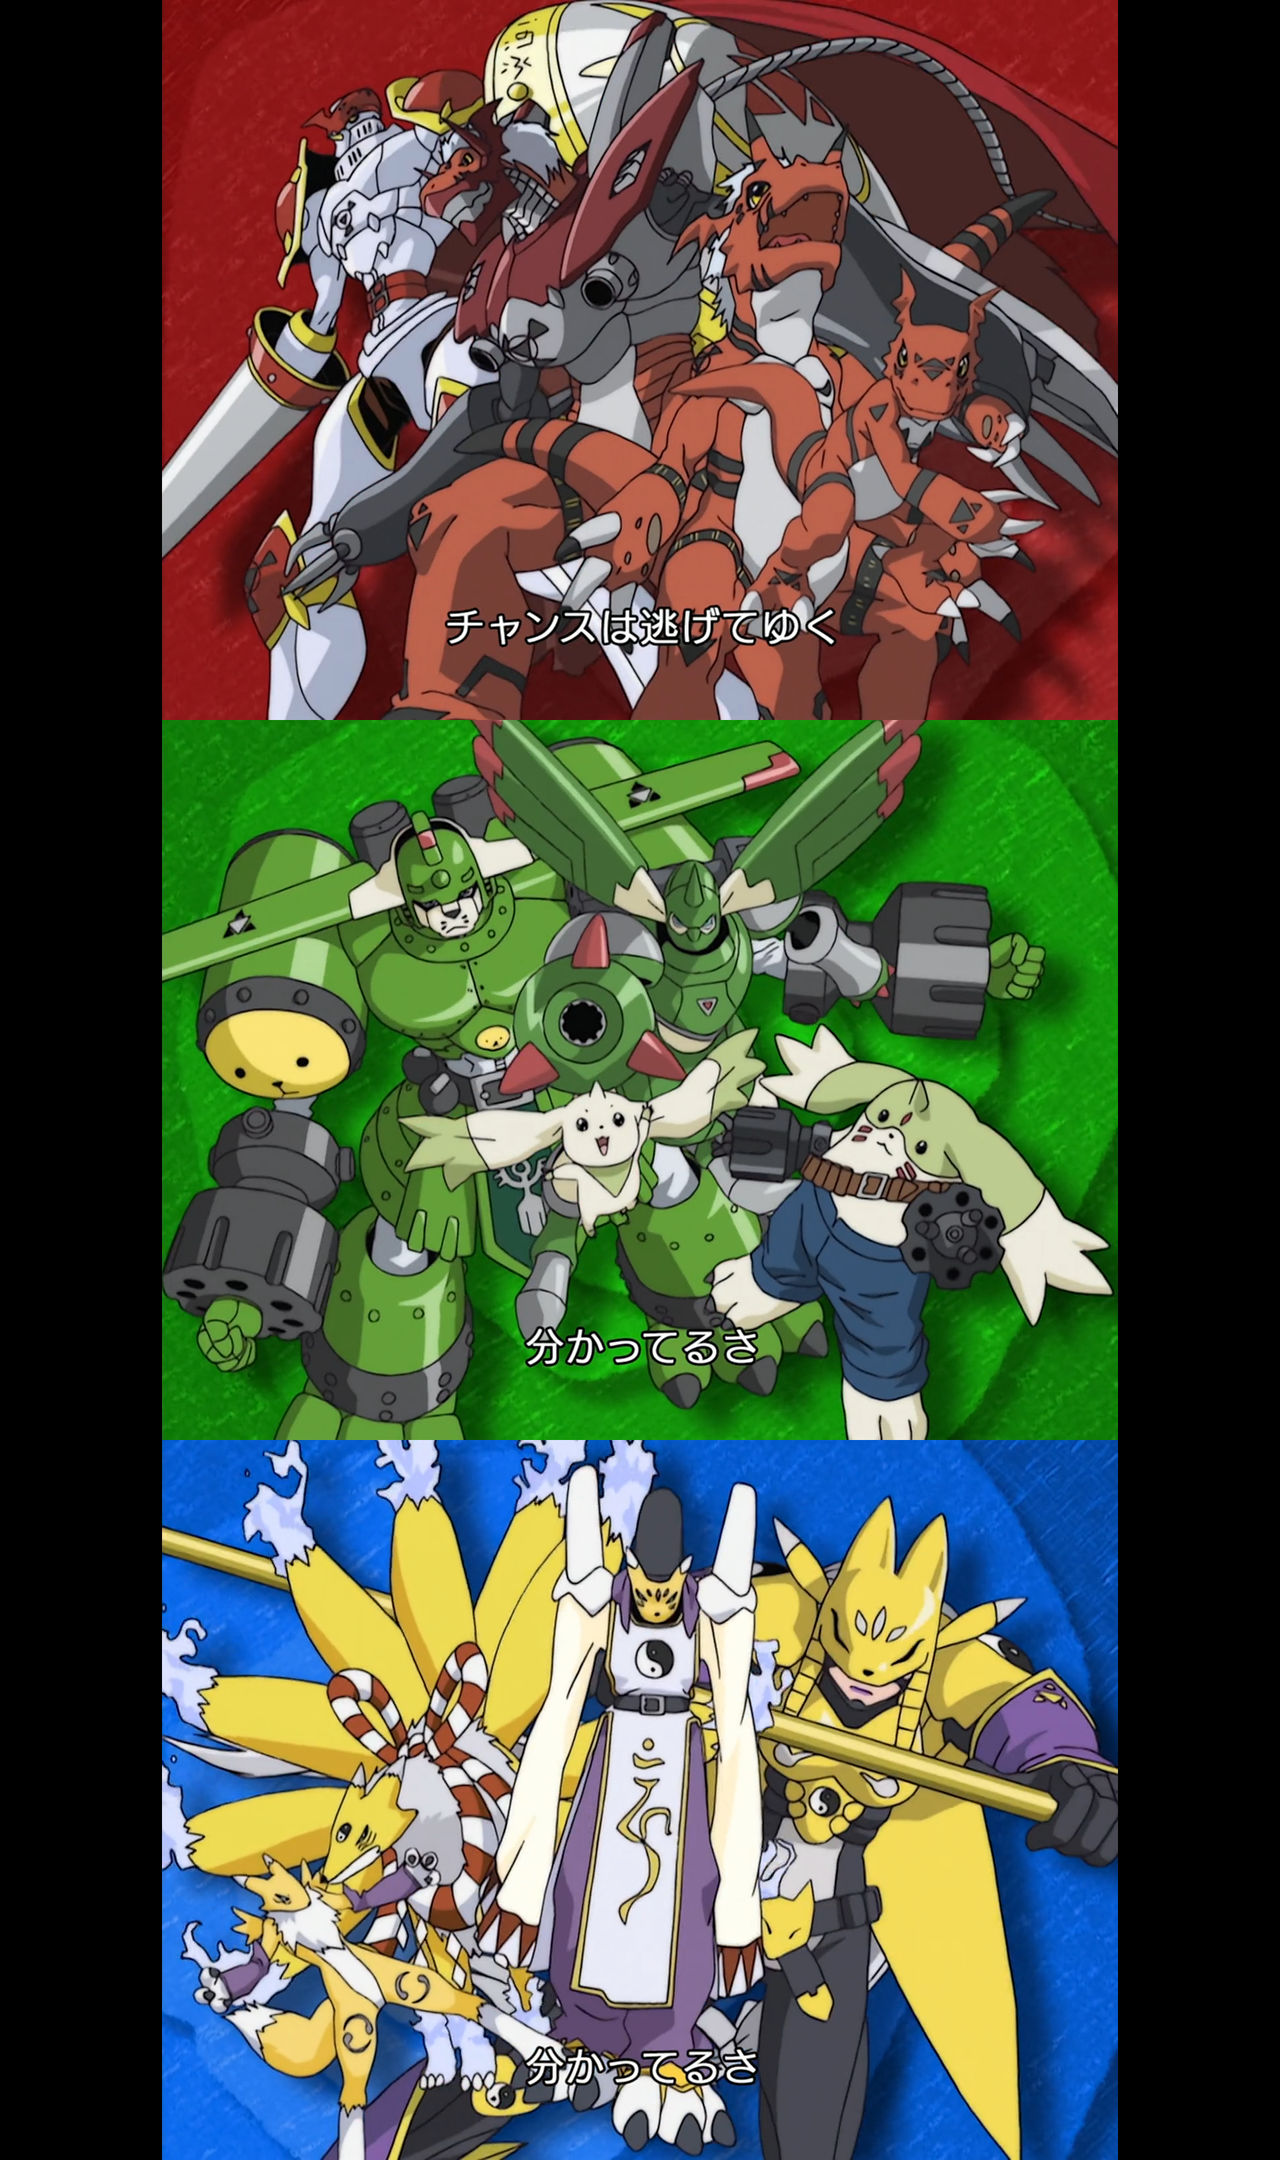 Evolution Digimon Tamers by Willian92 on DeviantArt